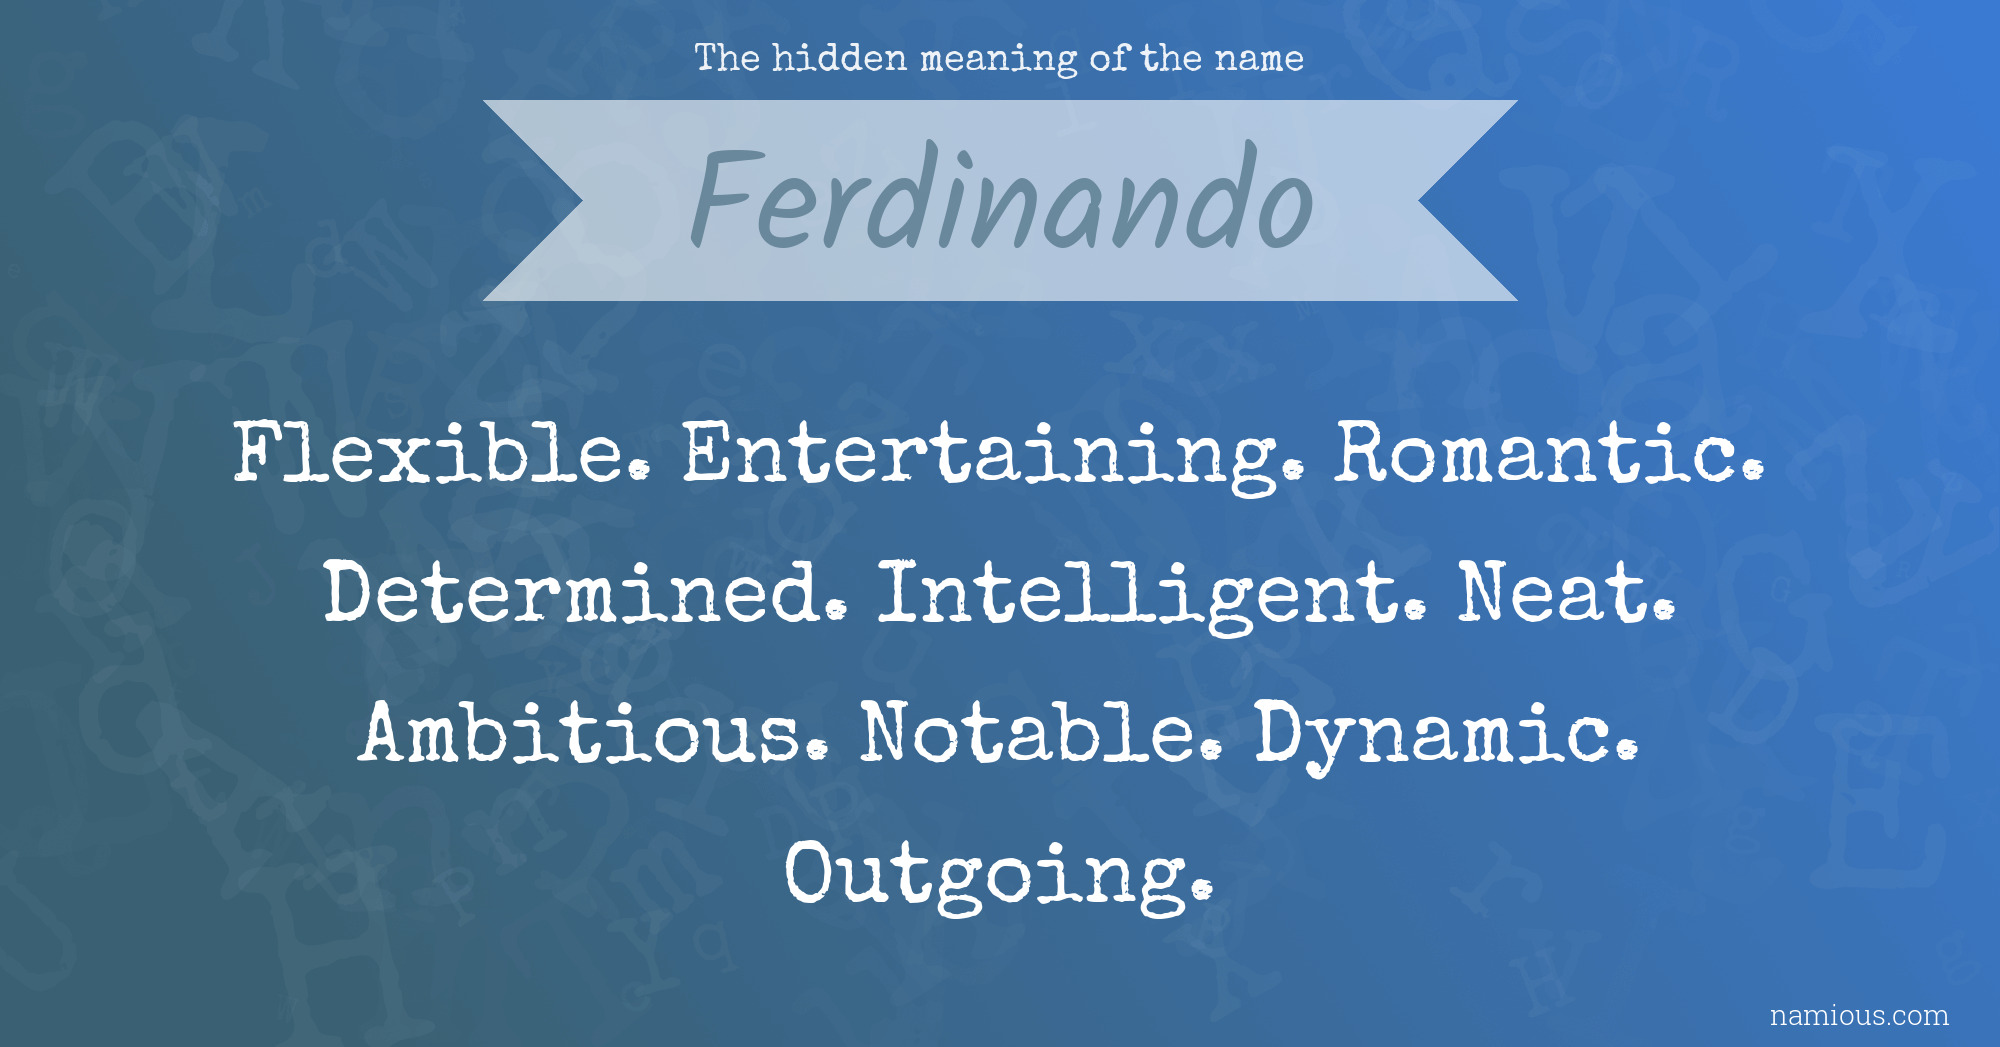 The hidden meaning of the name Ferdinando